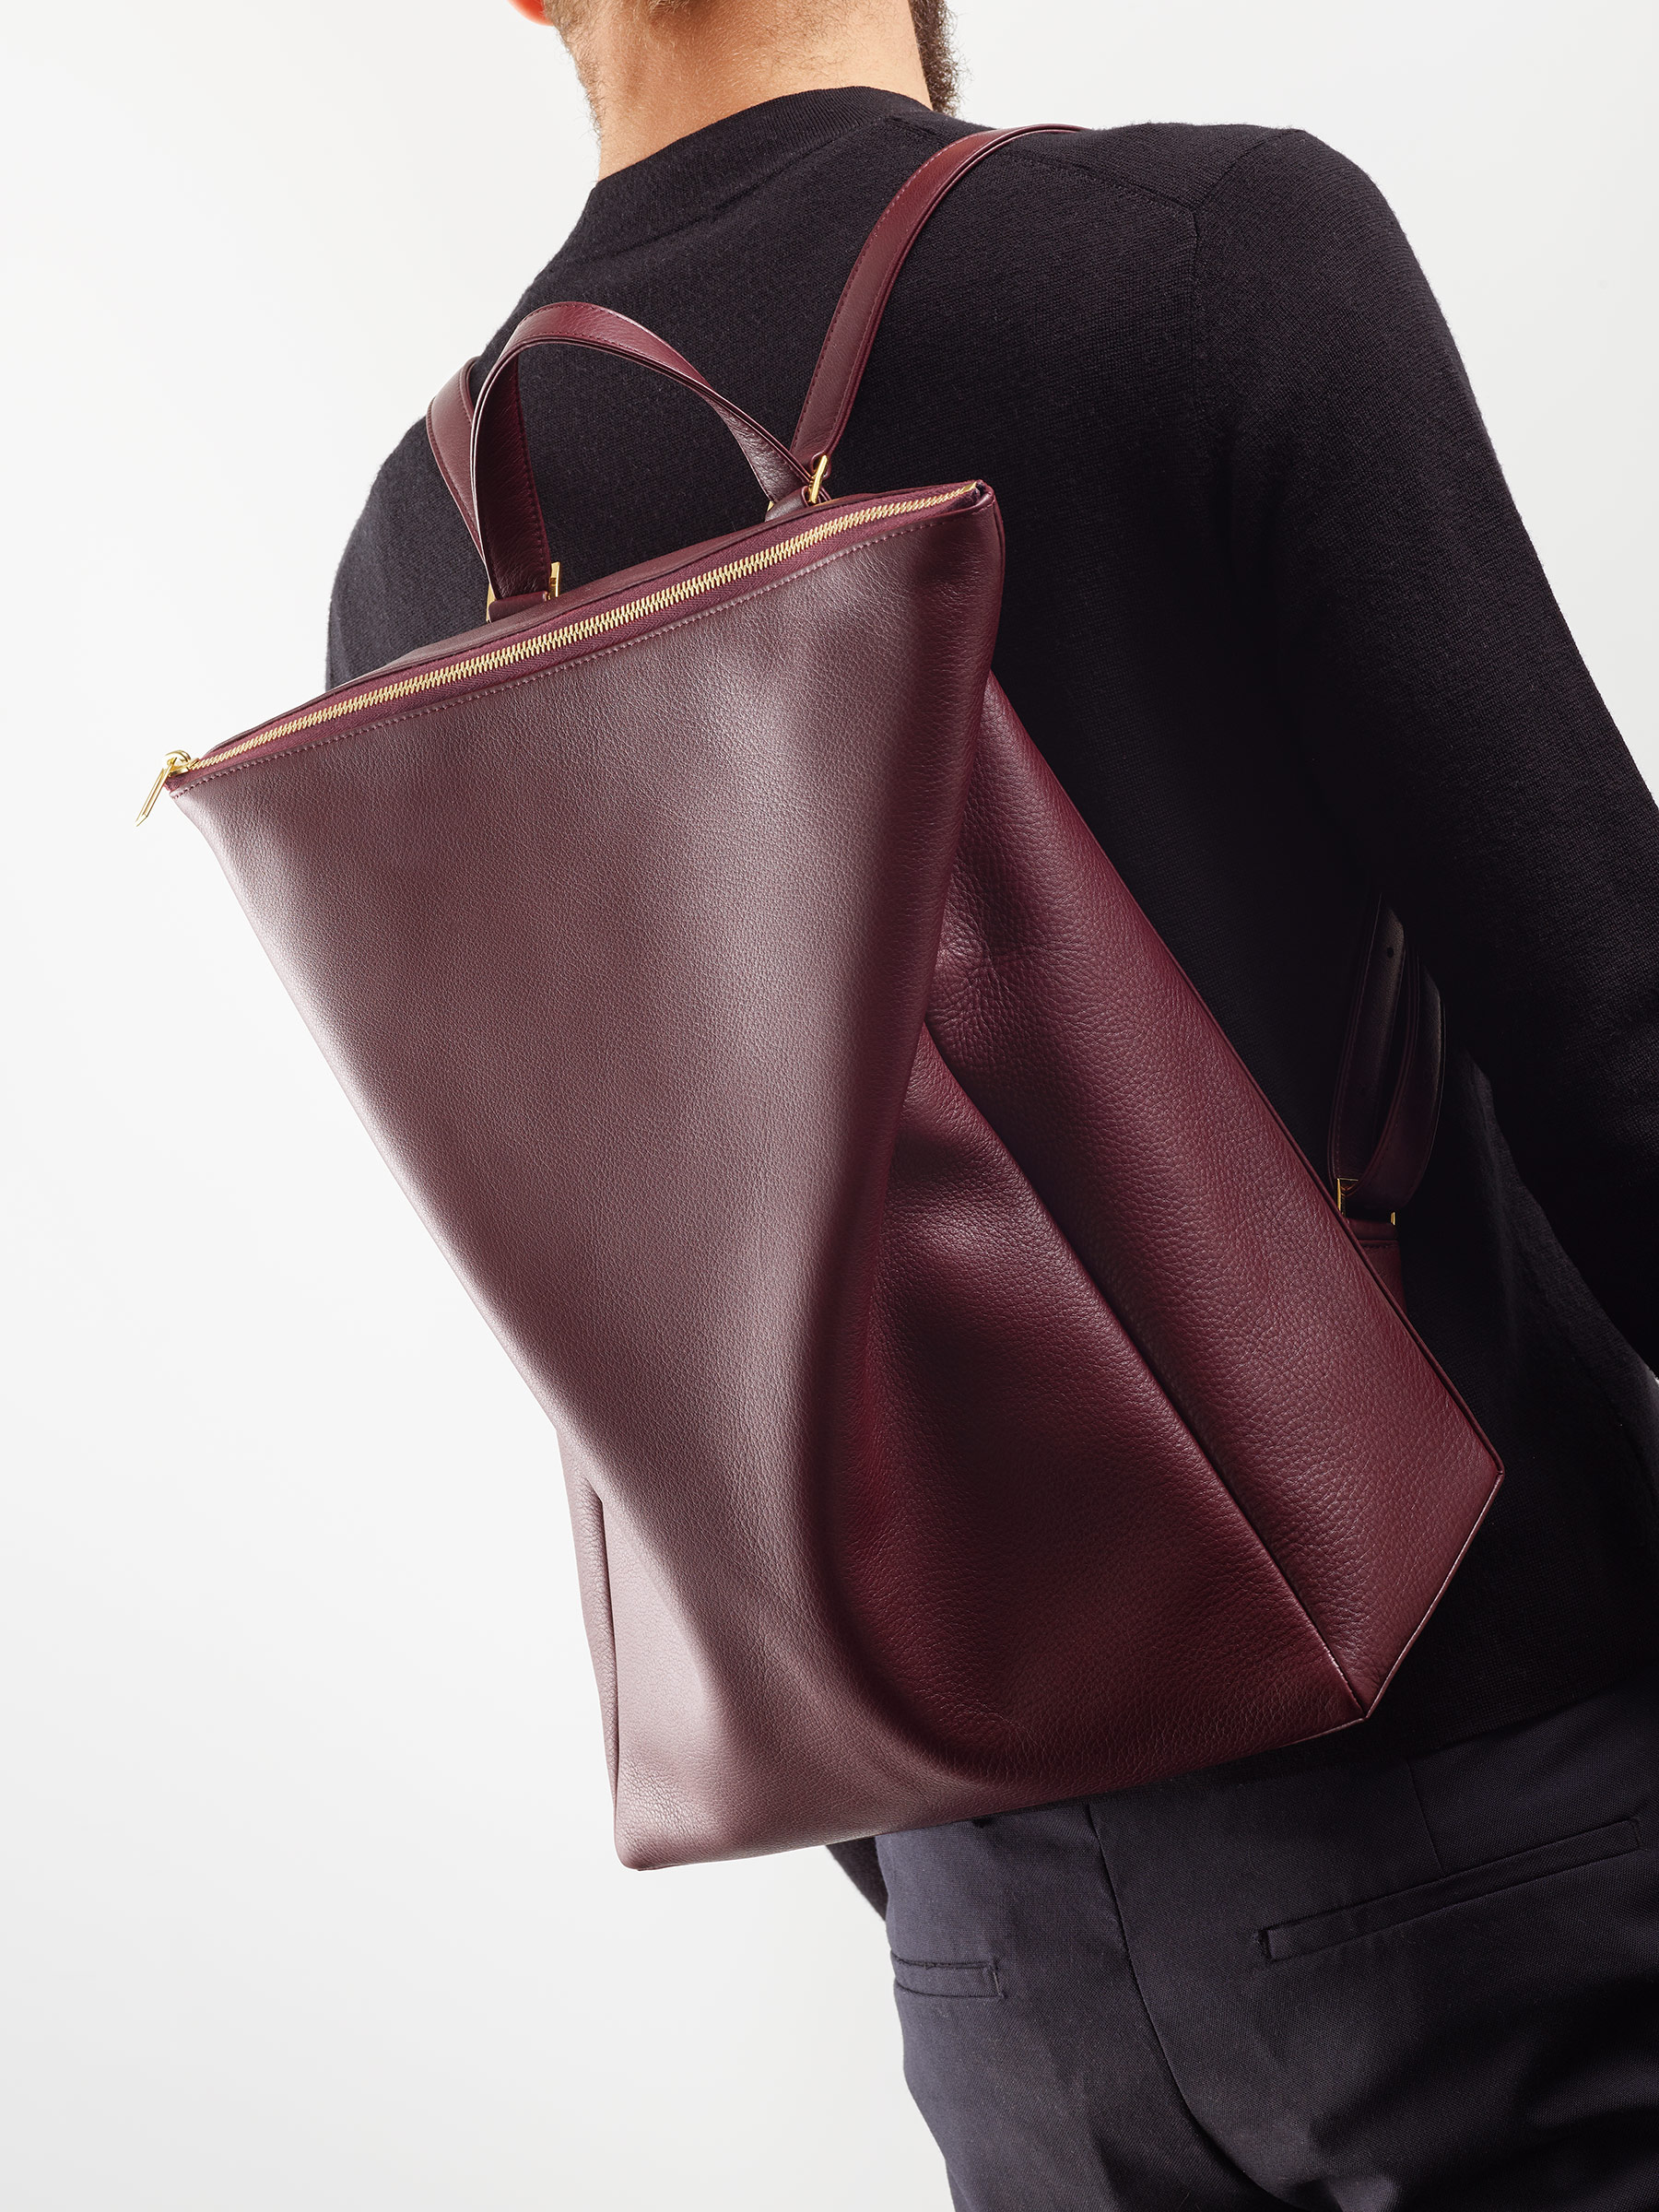 MARSH backpack in burgundy calfskin leather | TSATSAS